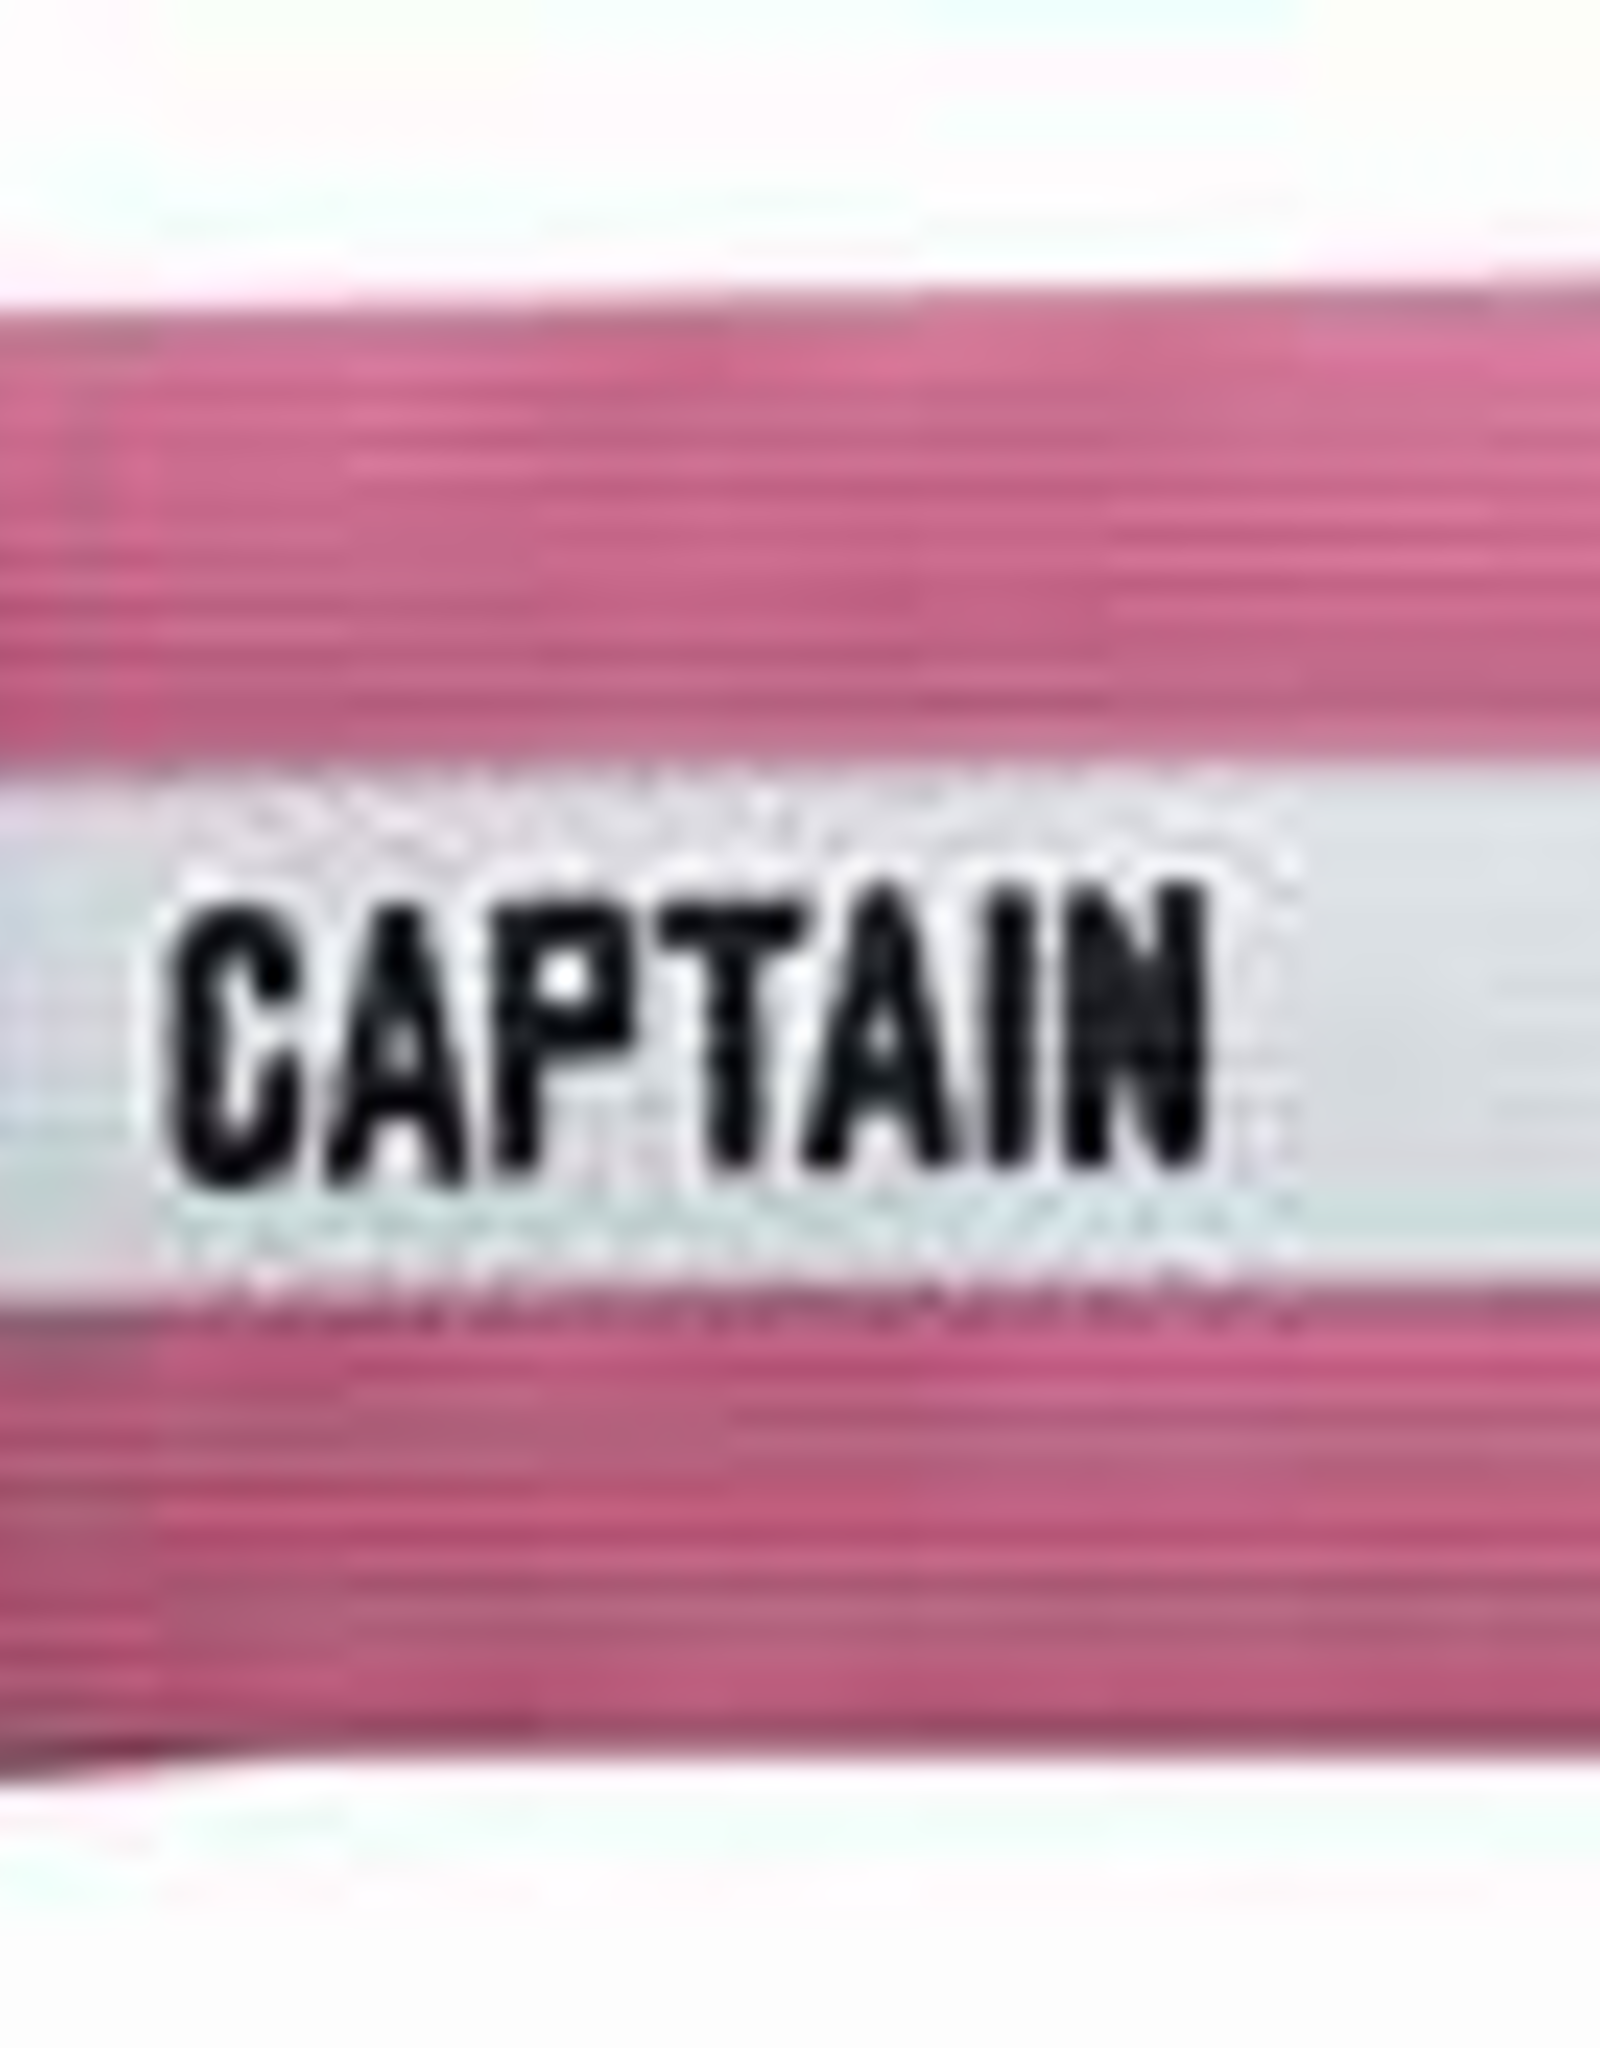 Kwik Goal KG Captain Armband